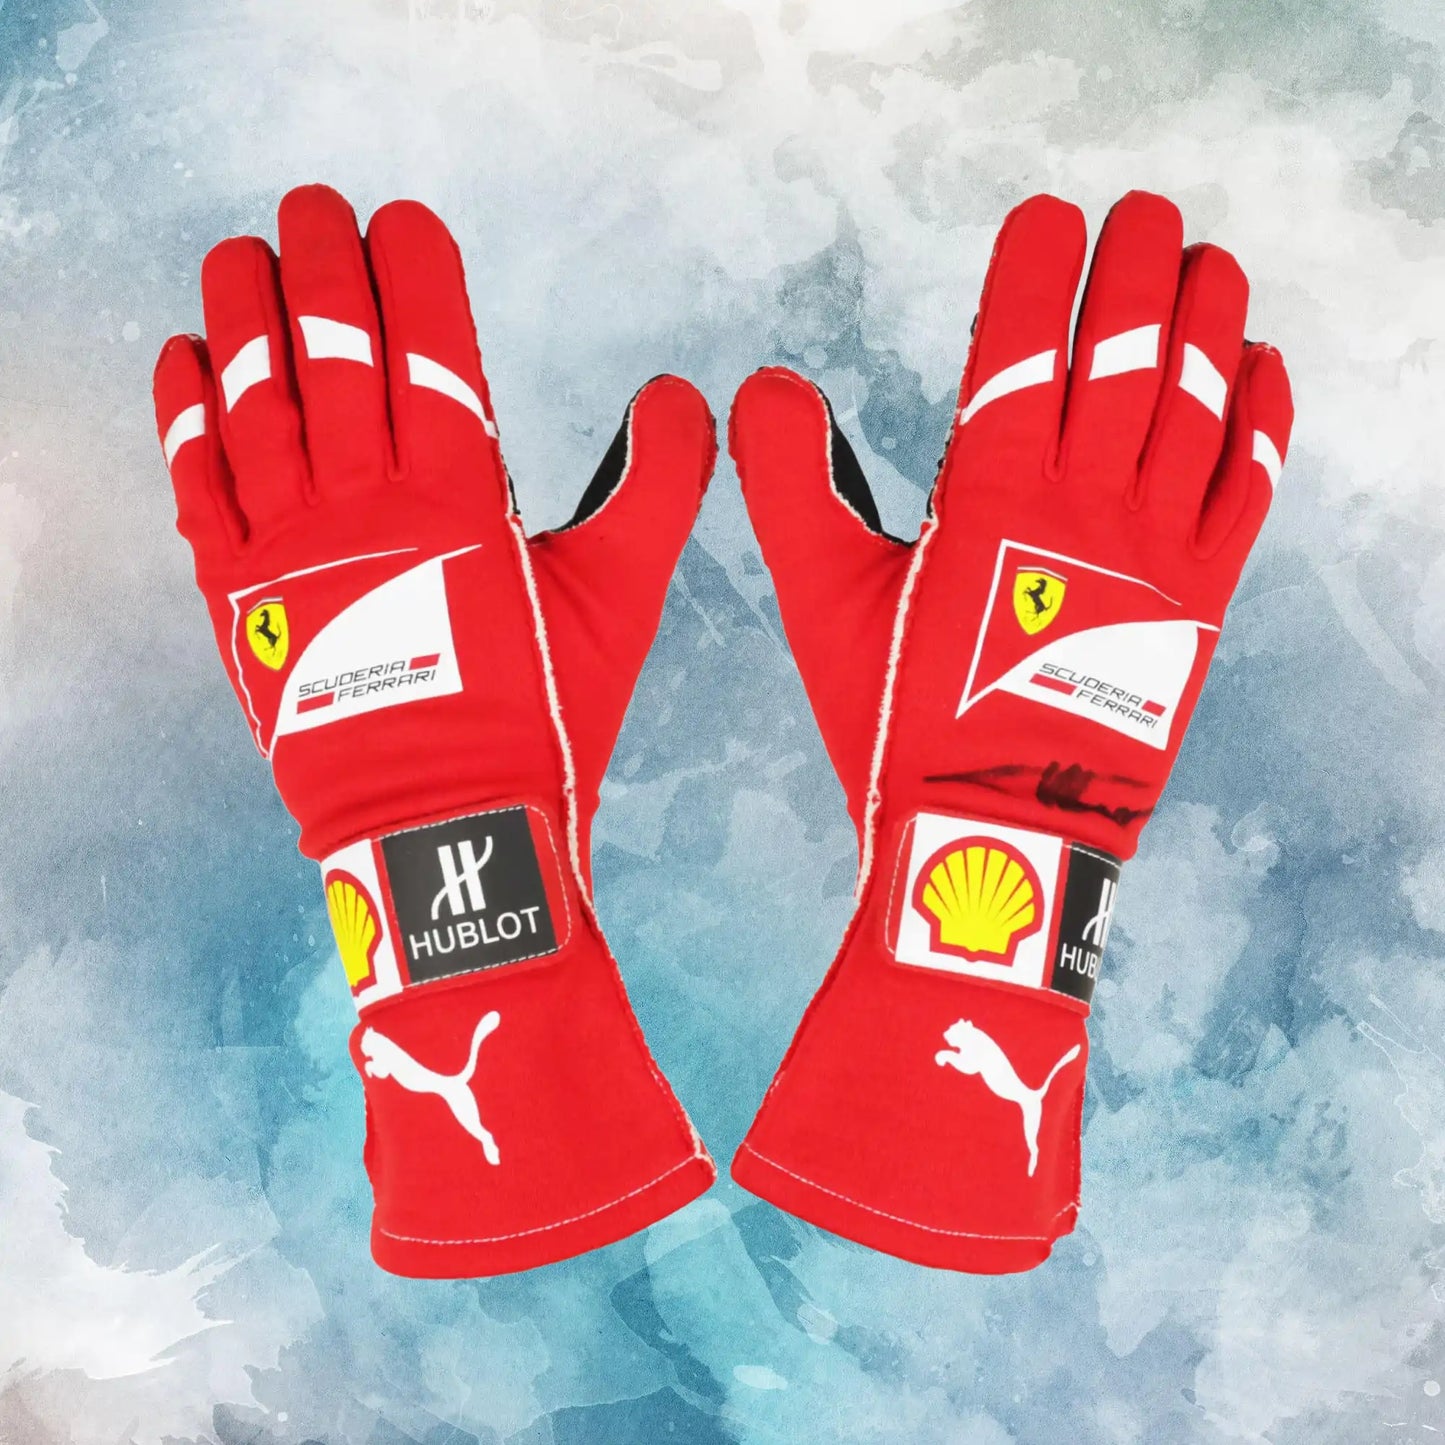 2014 Fernando Alonso Race Scuderia Ferrari F1 Gloves / Fernando Alonso Replica Race Gloves